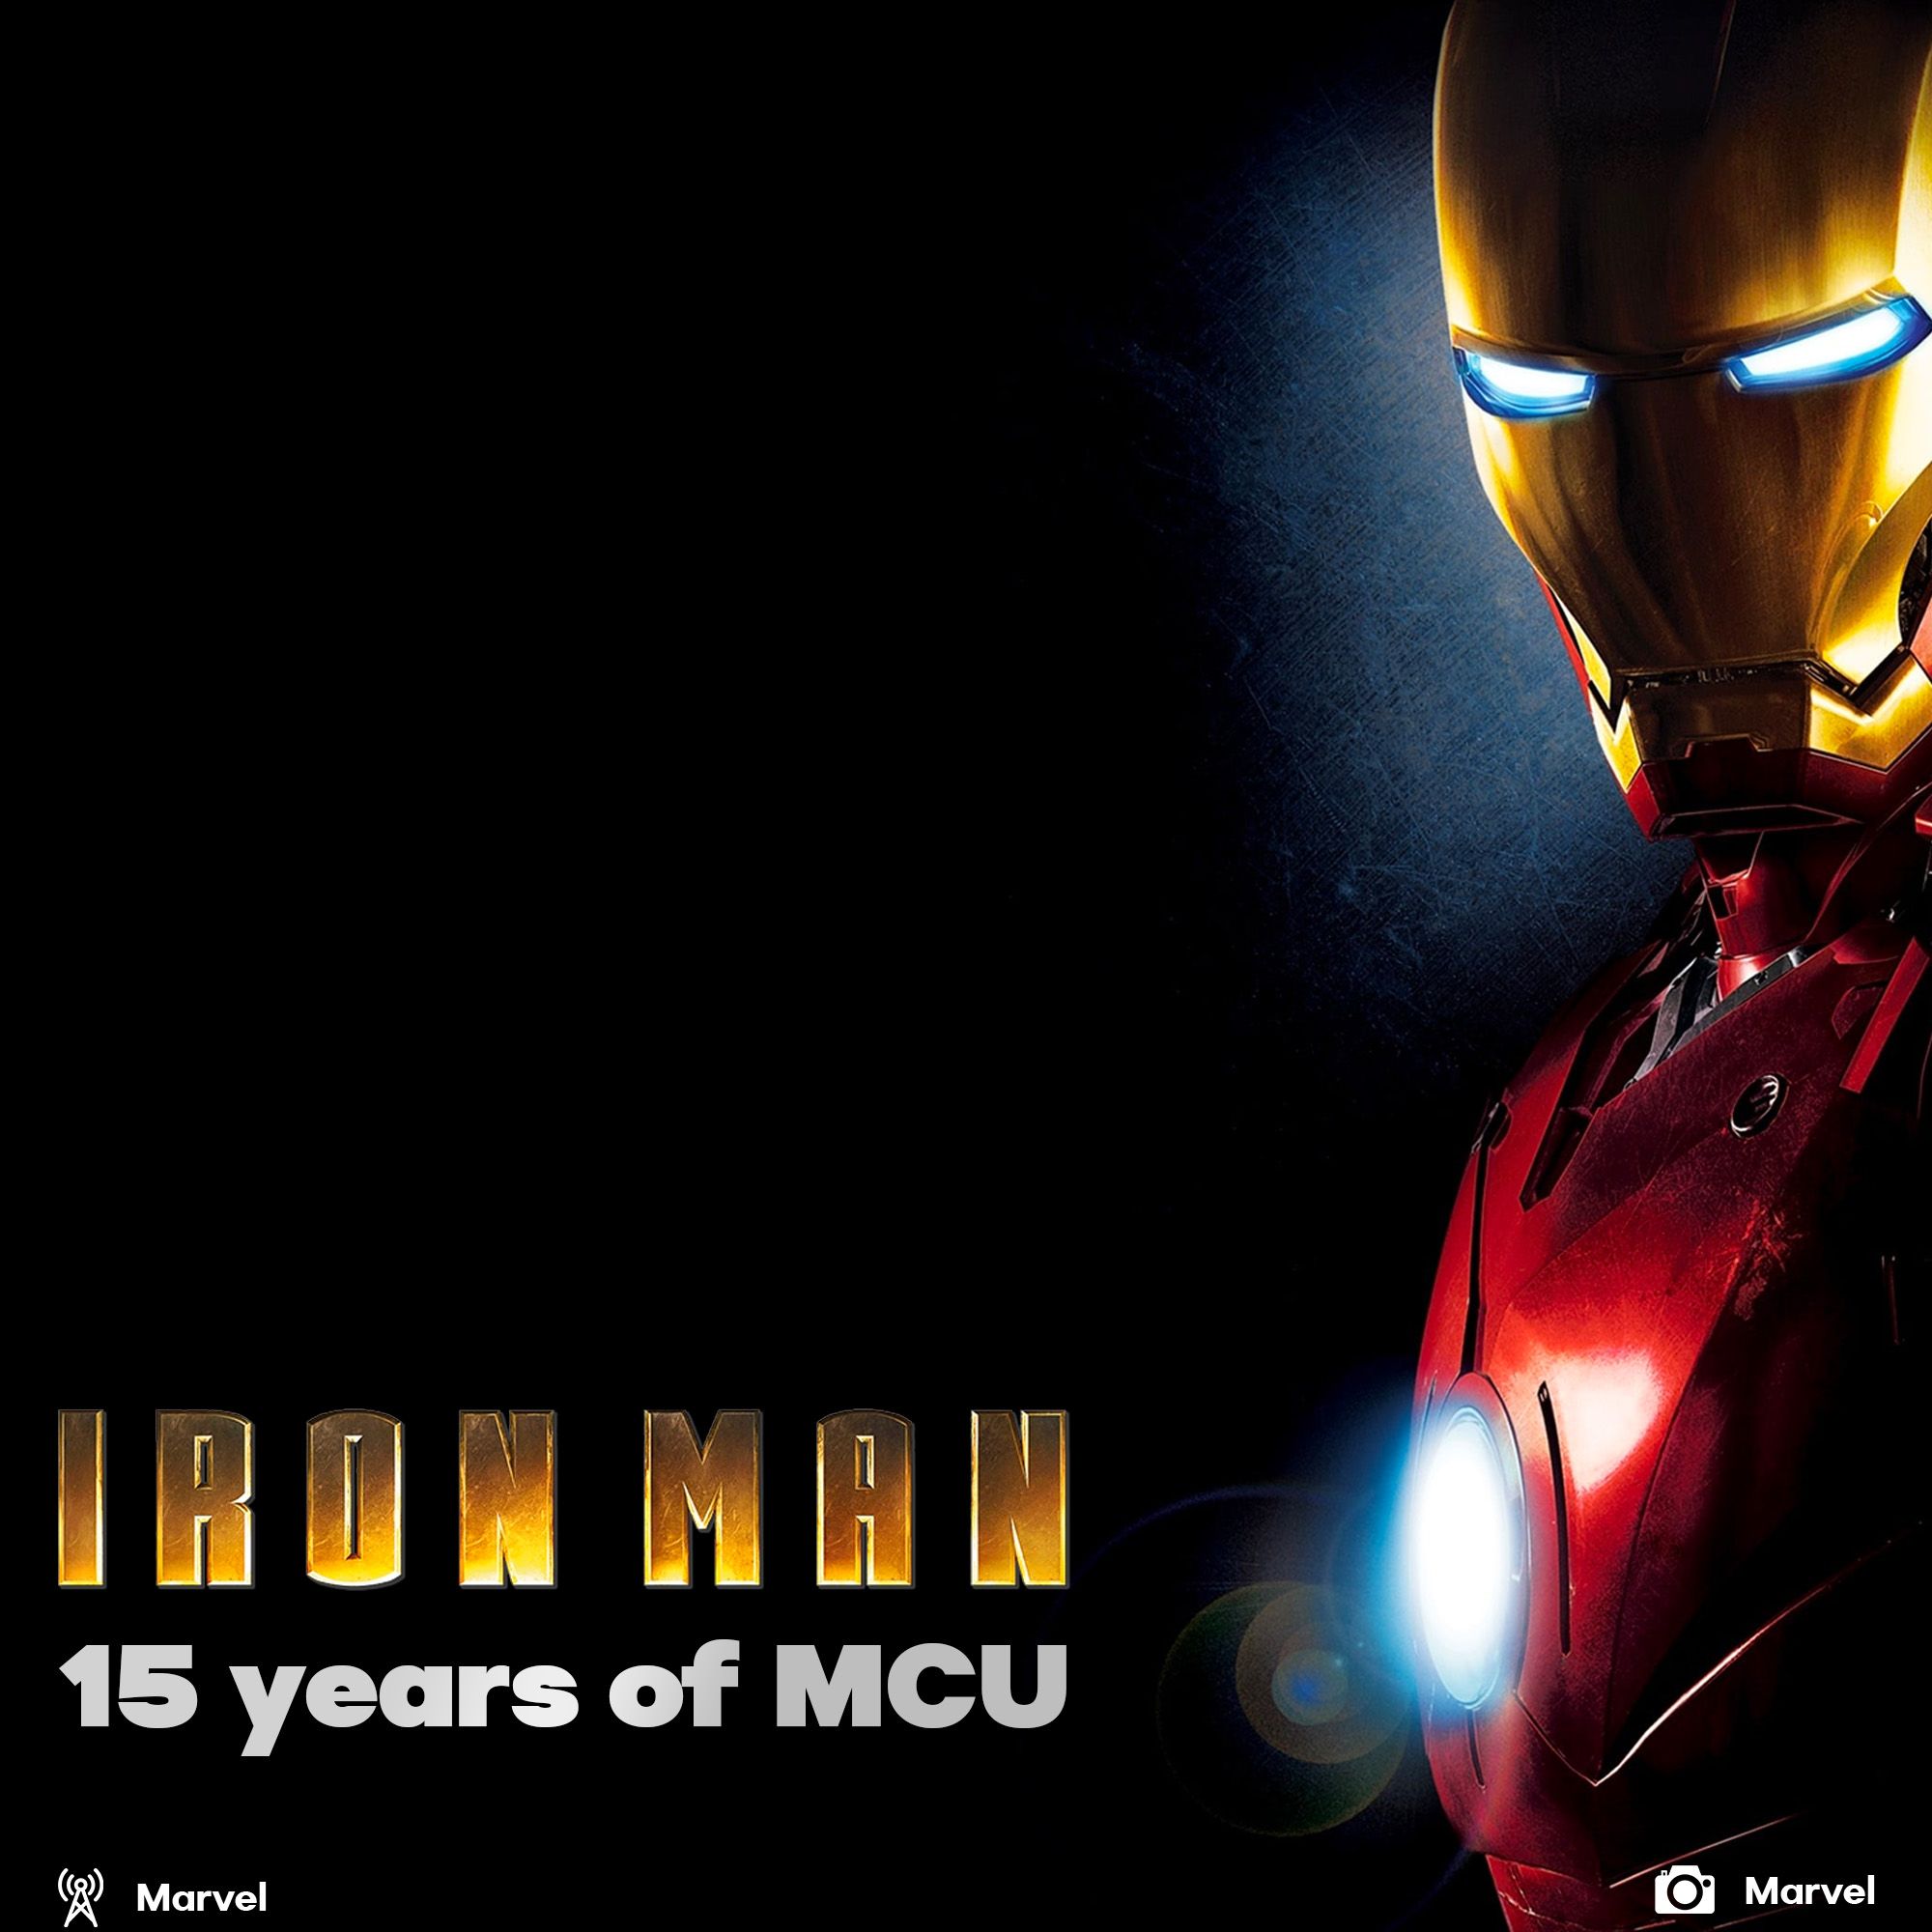 15 years of MCU